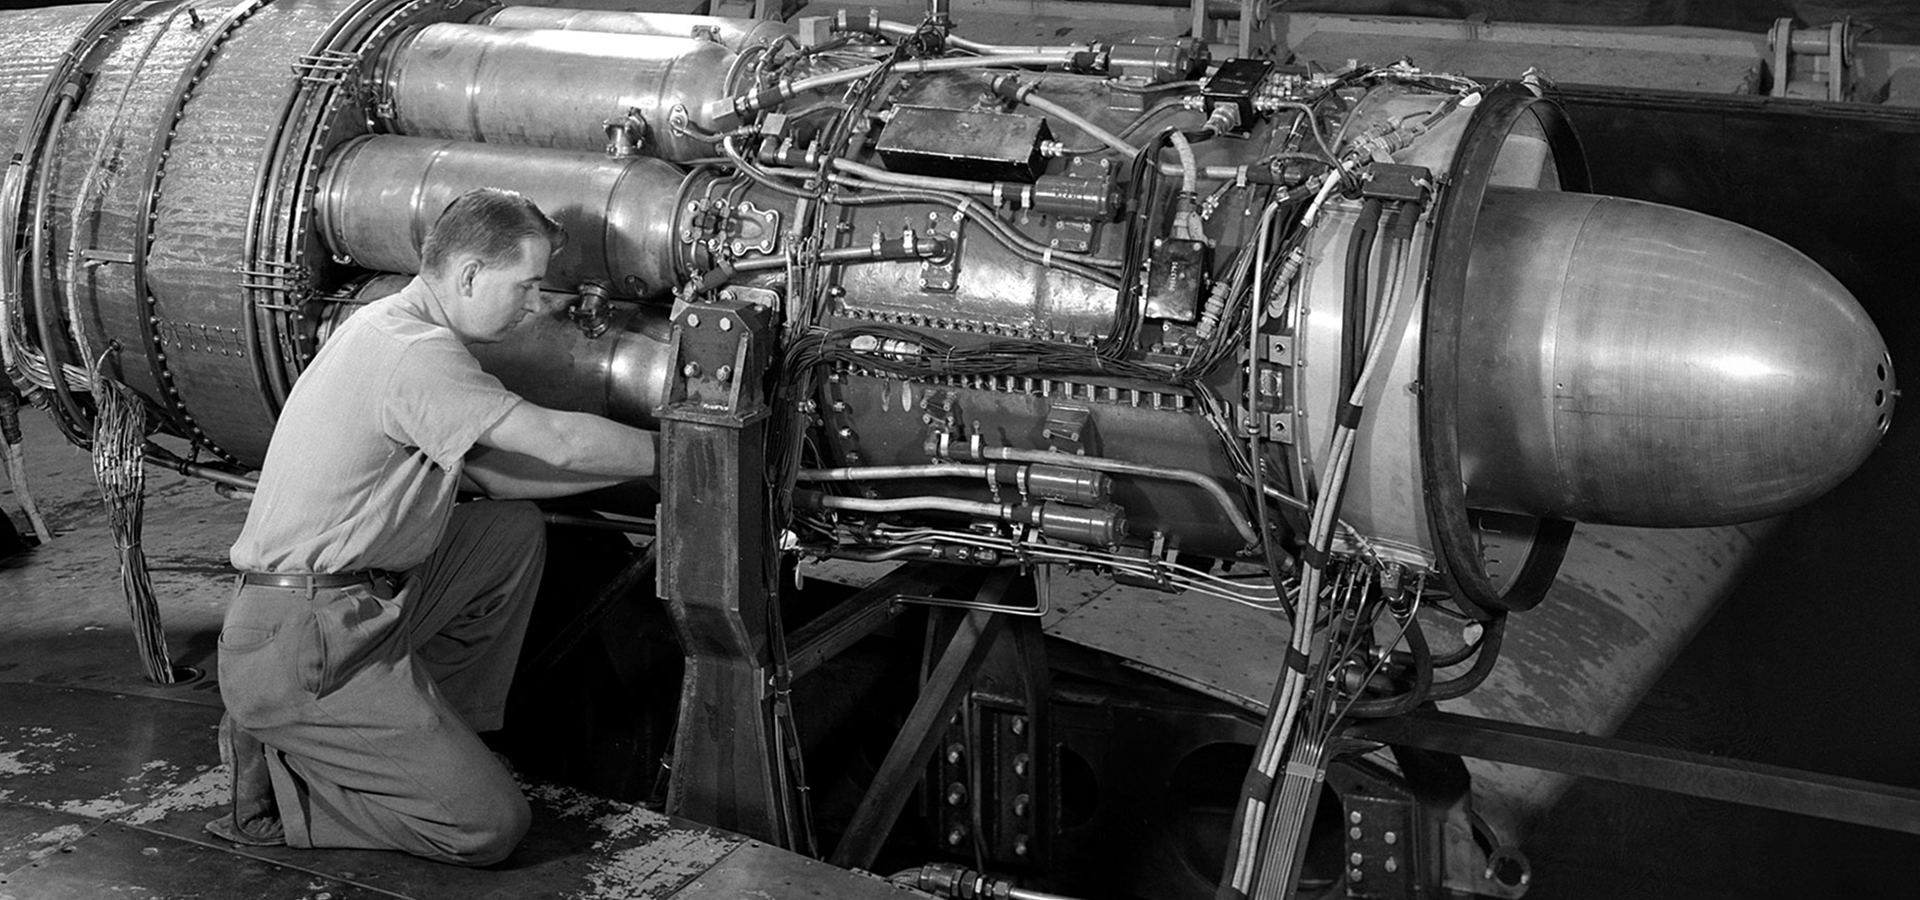 Guy kneeling working on a jet engine